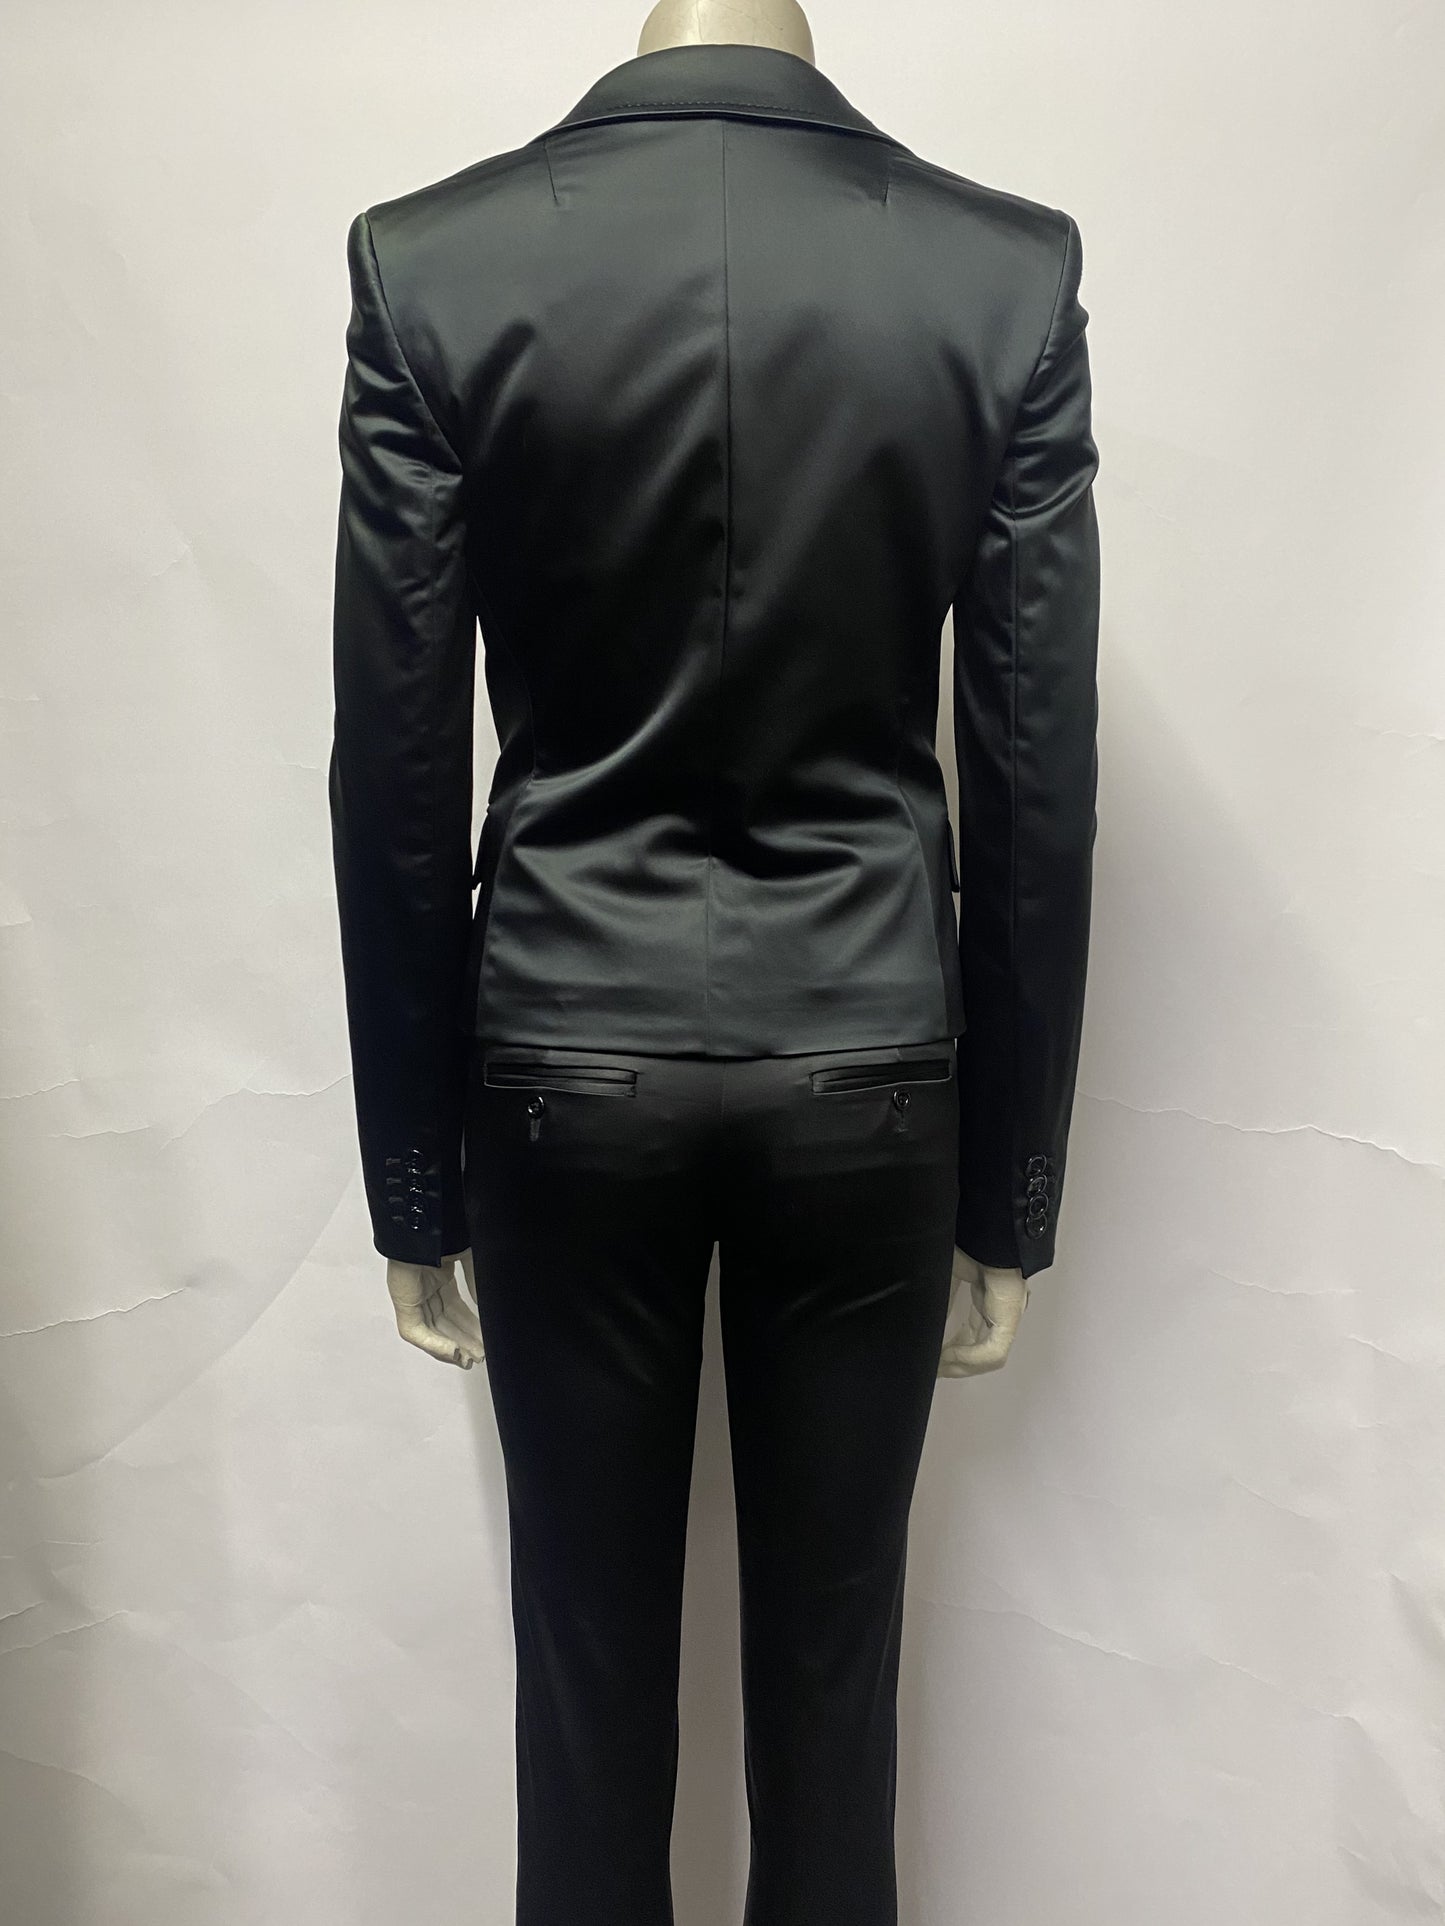 Dolce & Gabbana Black Blazer and Trouser Suit 8